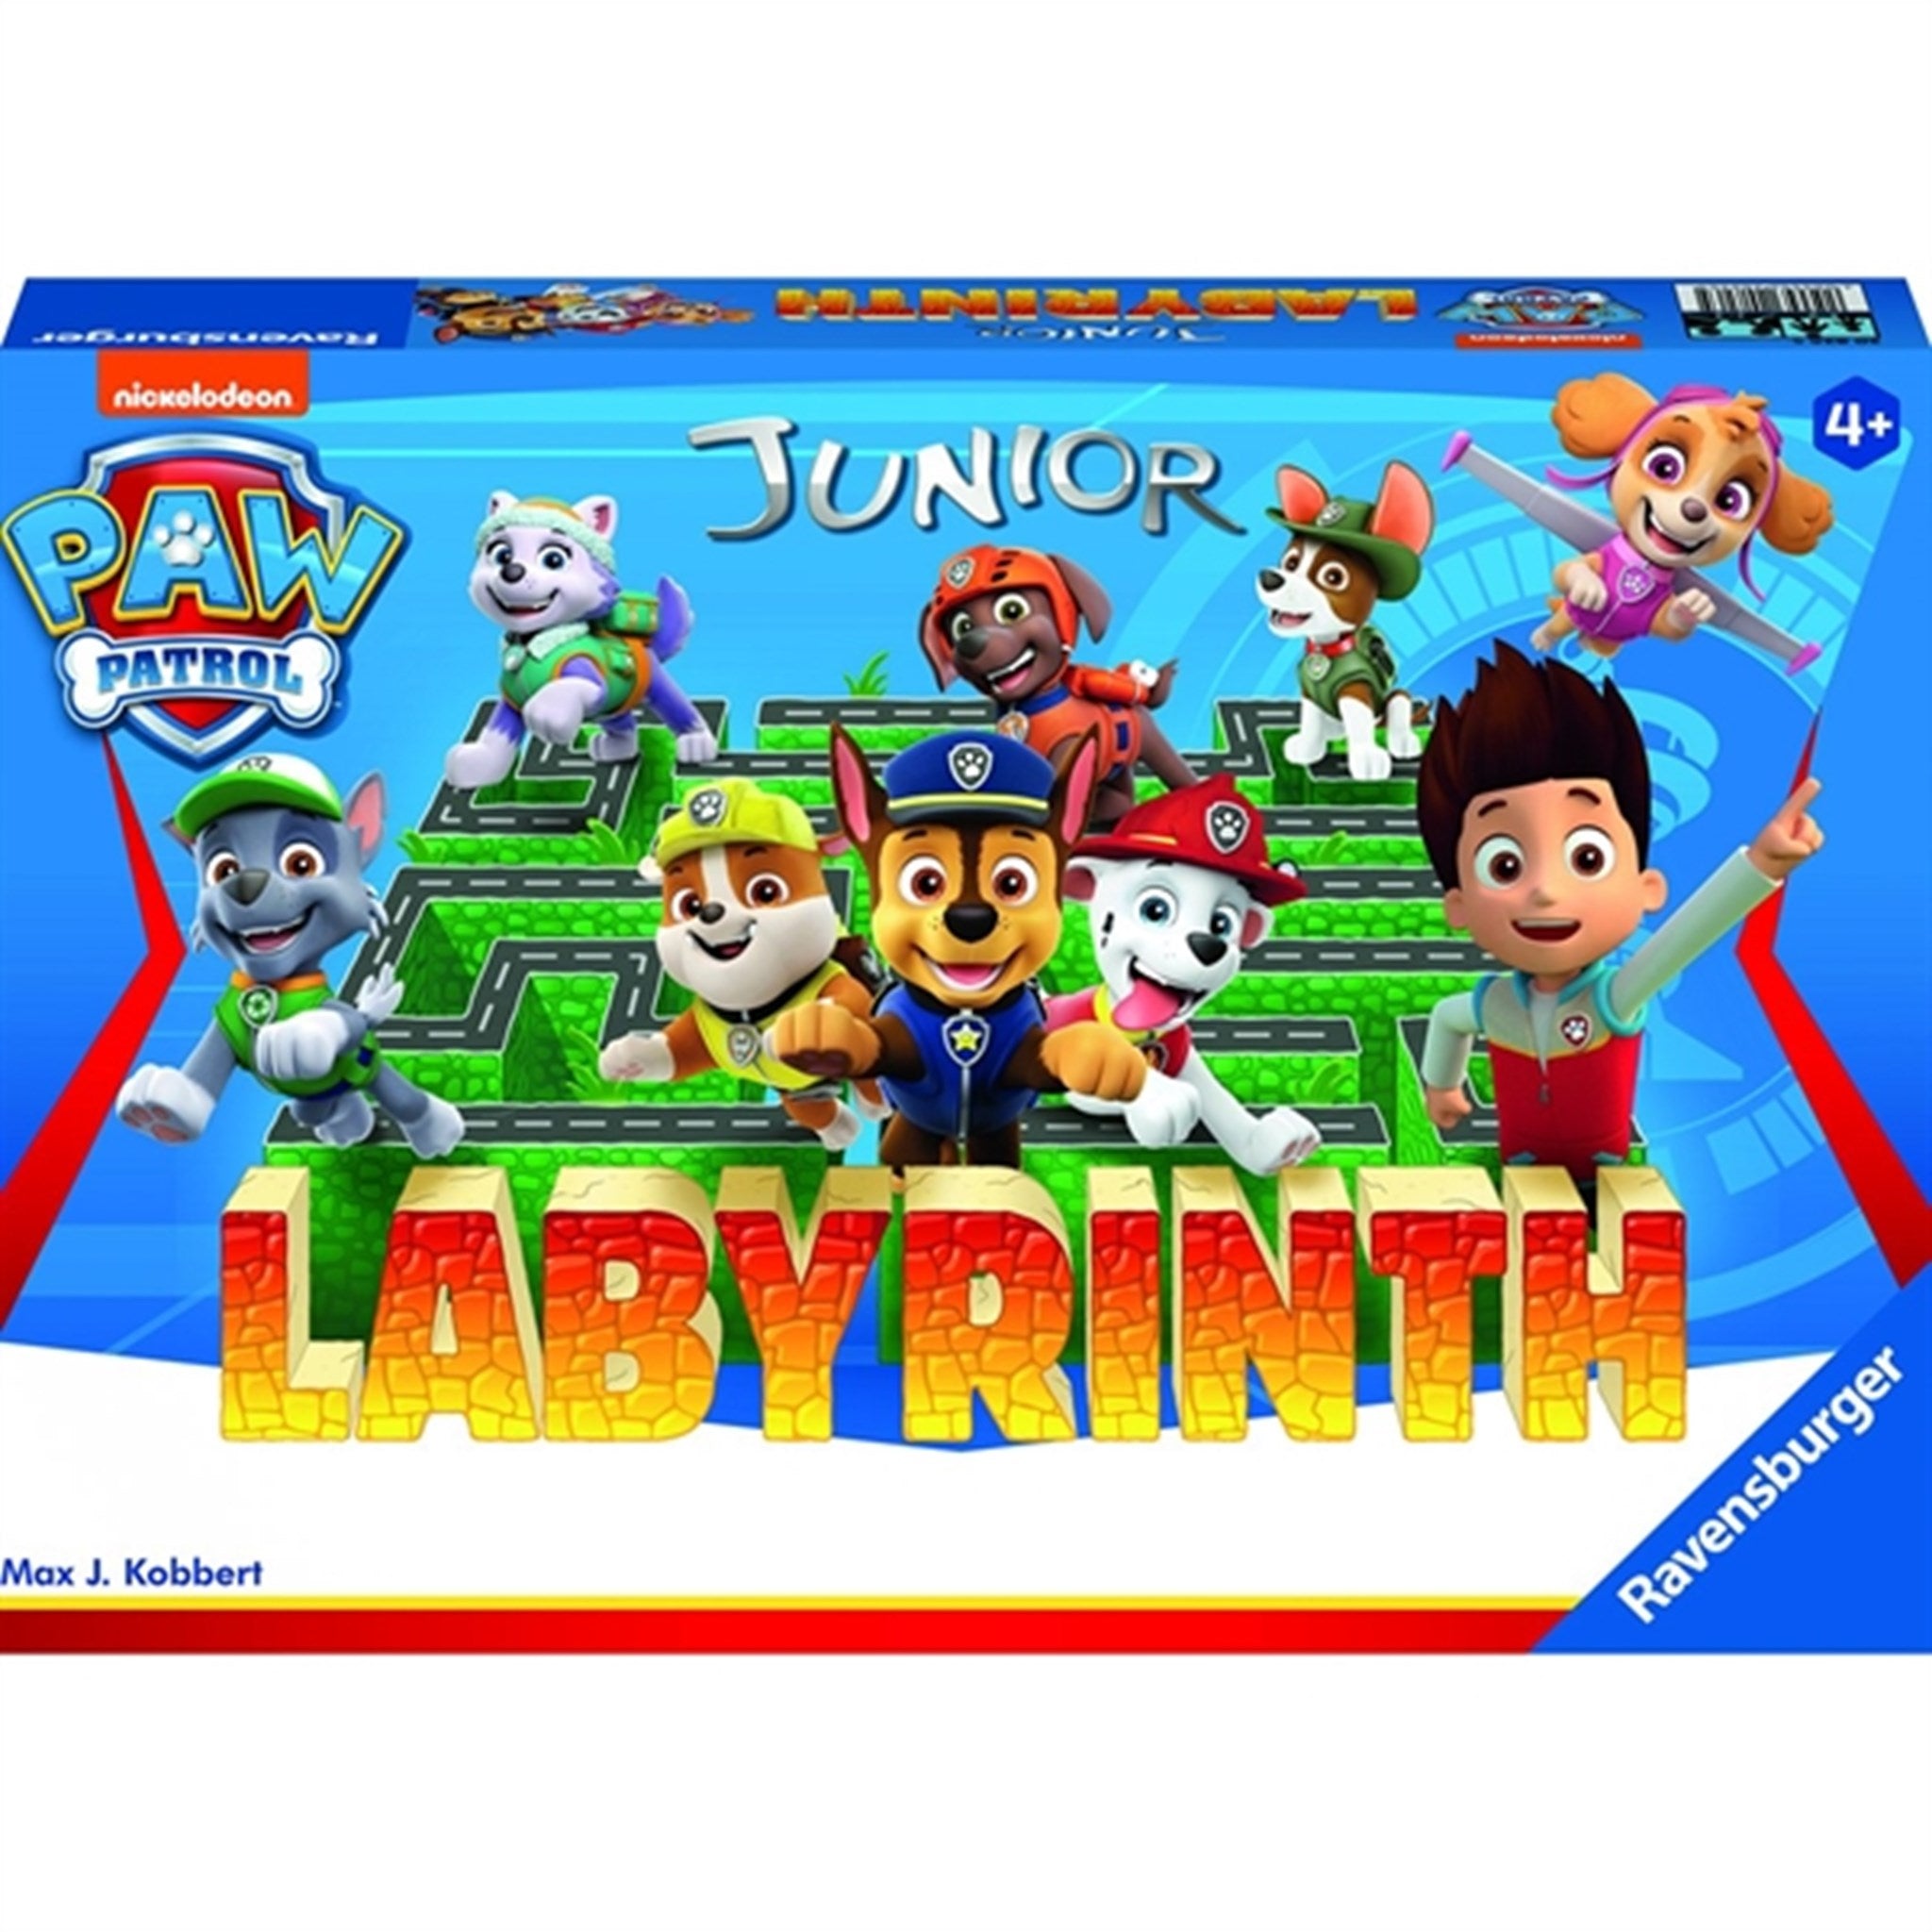 Ravensburger Paw Patrol Junior Labyrint Board Game